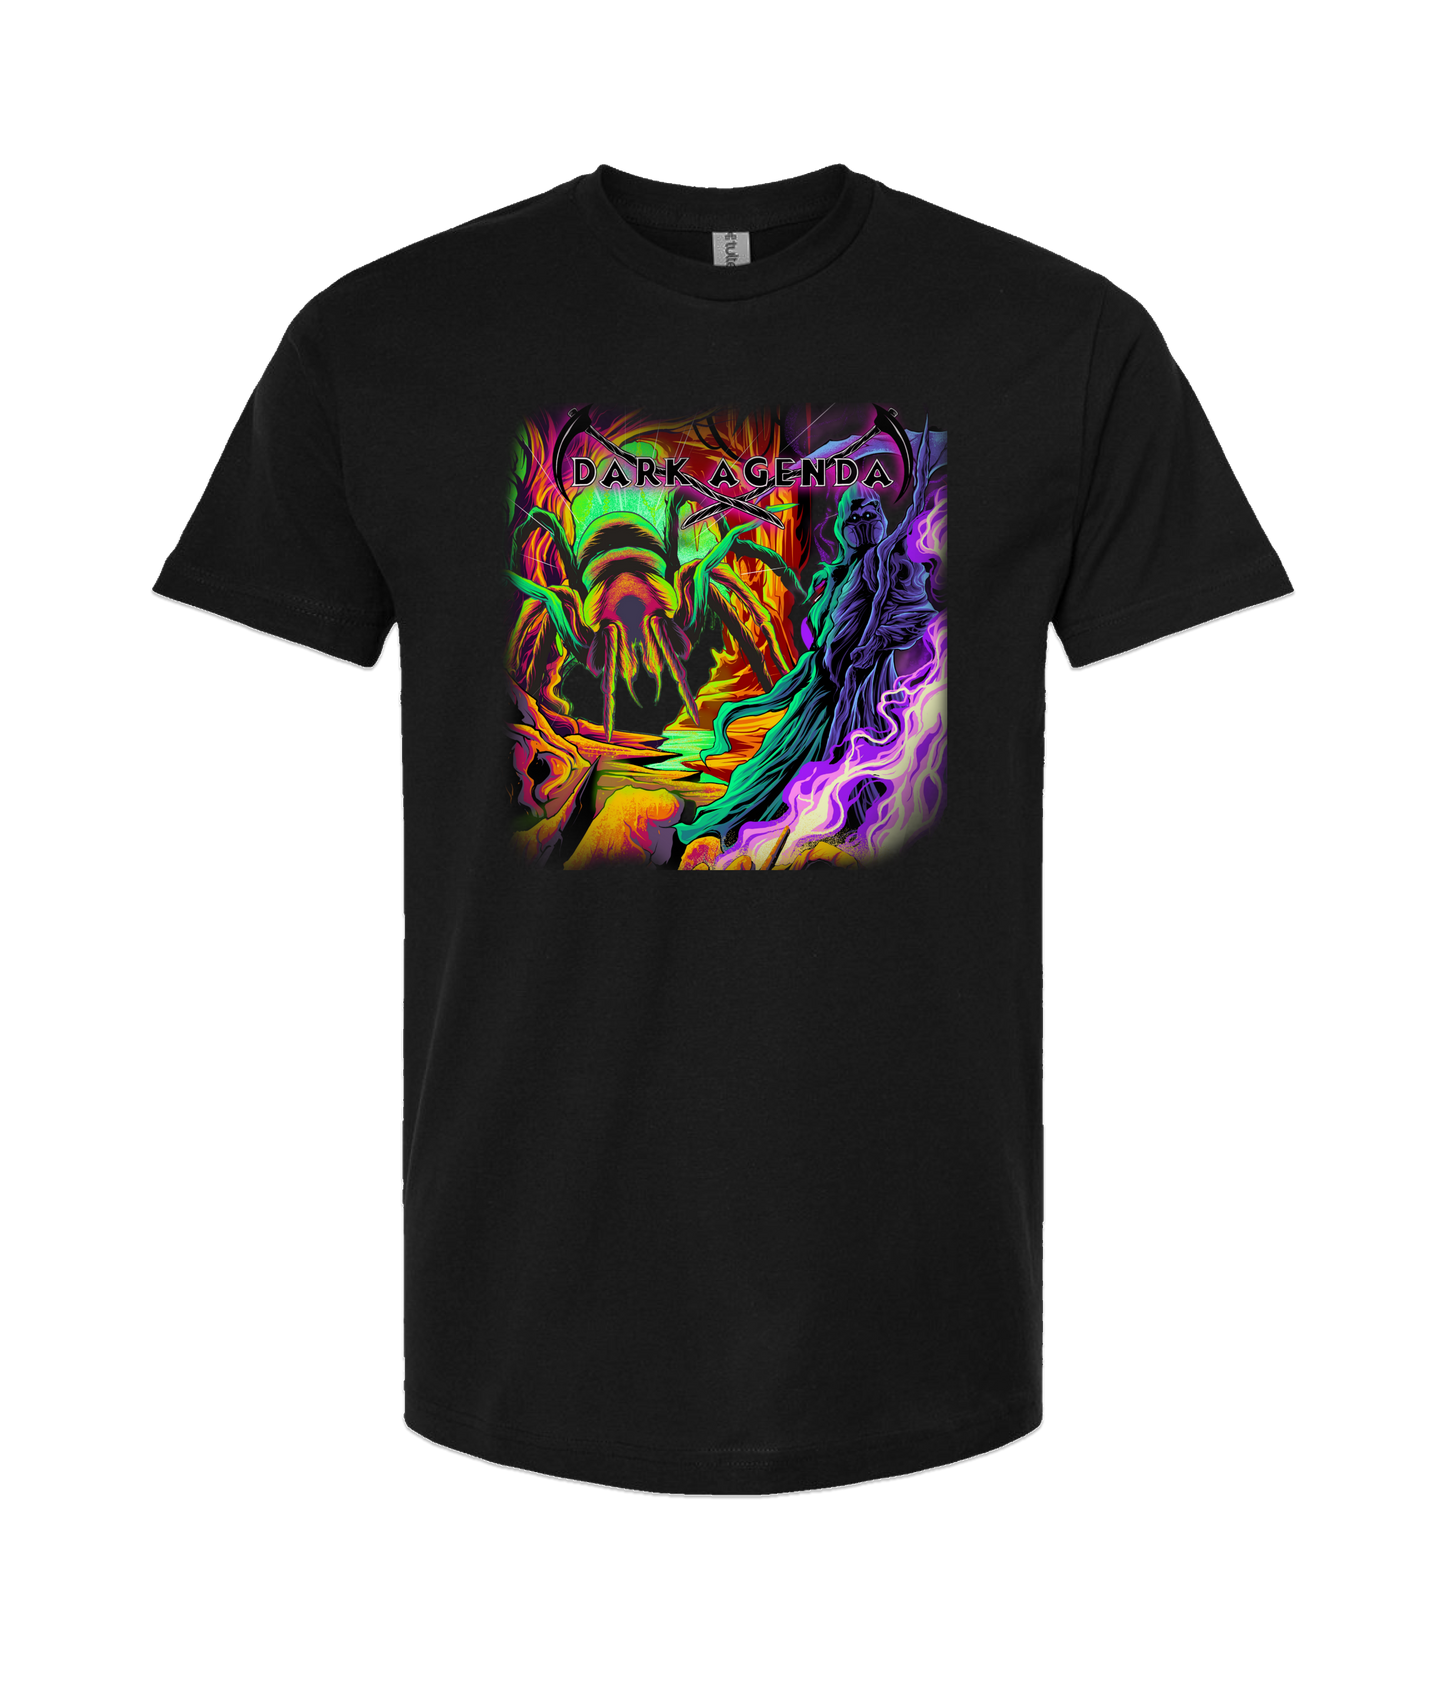 Dark Agenda - Colored Spider - Black T-Shirt